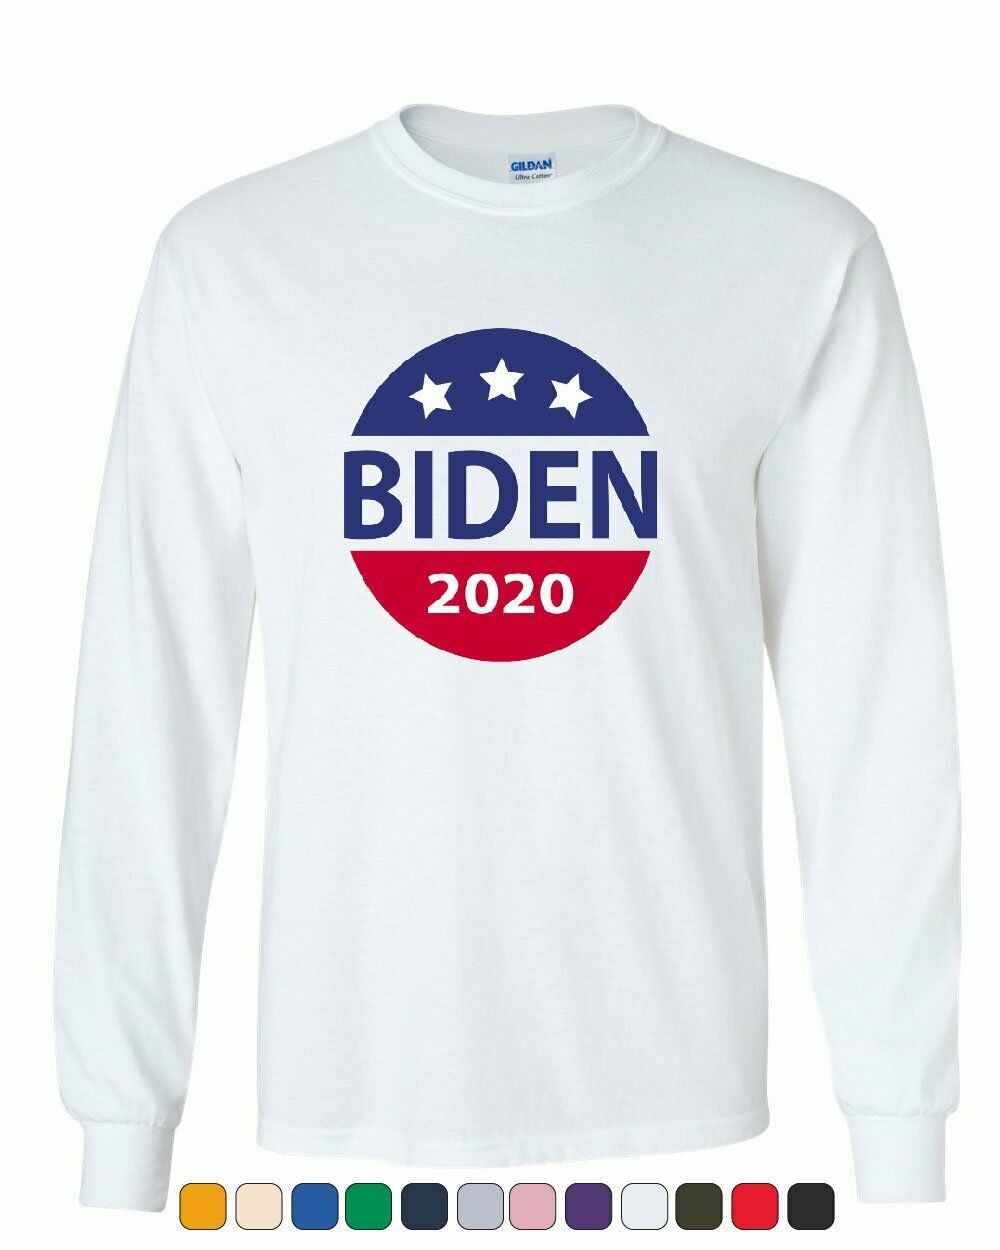 Joe Biden for President 2020 Long Sleeve T-Shirt Vote Democrat 2020 Election Tee